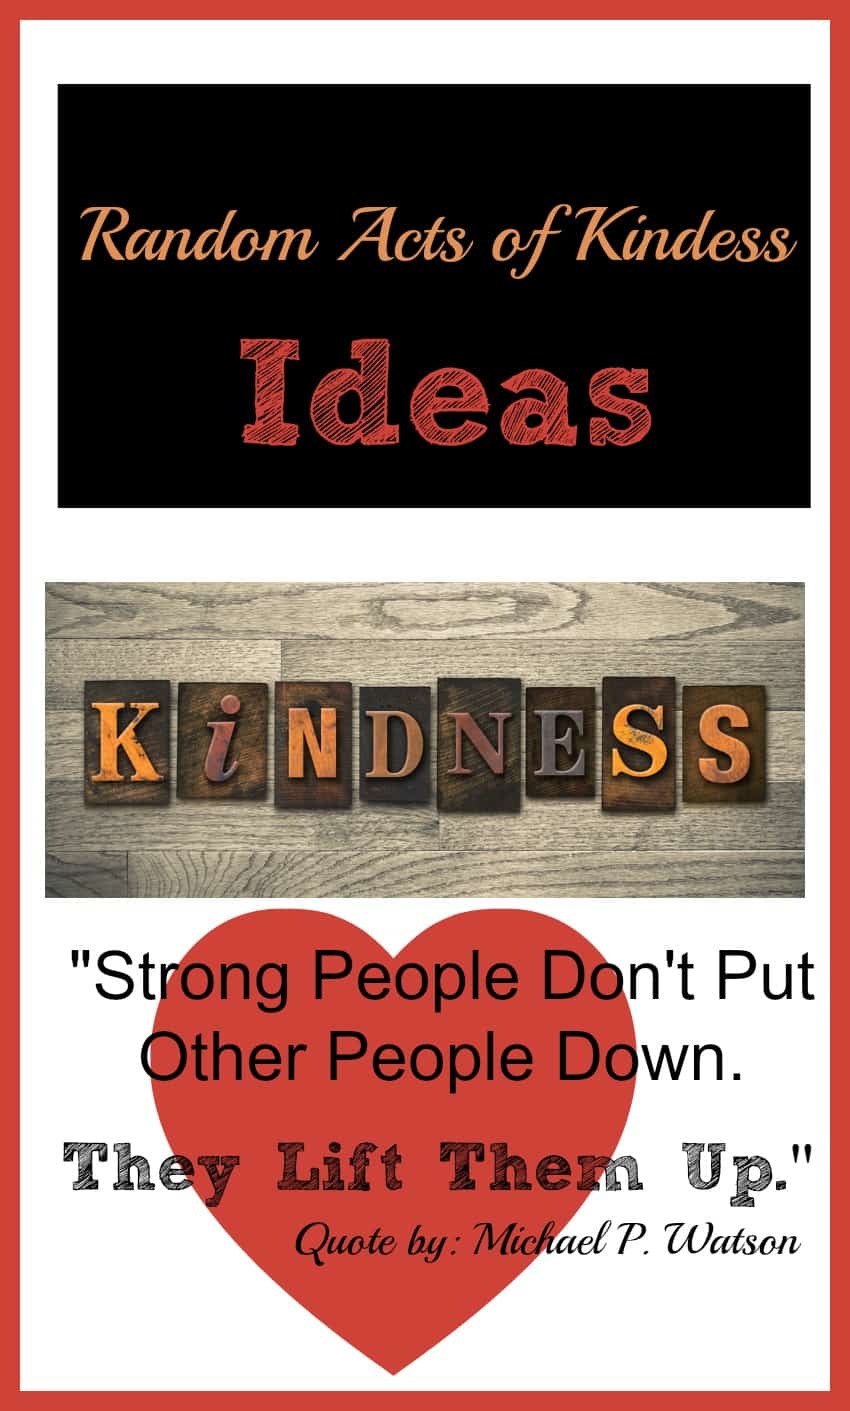 Random Acts of Kindness Ideas